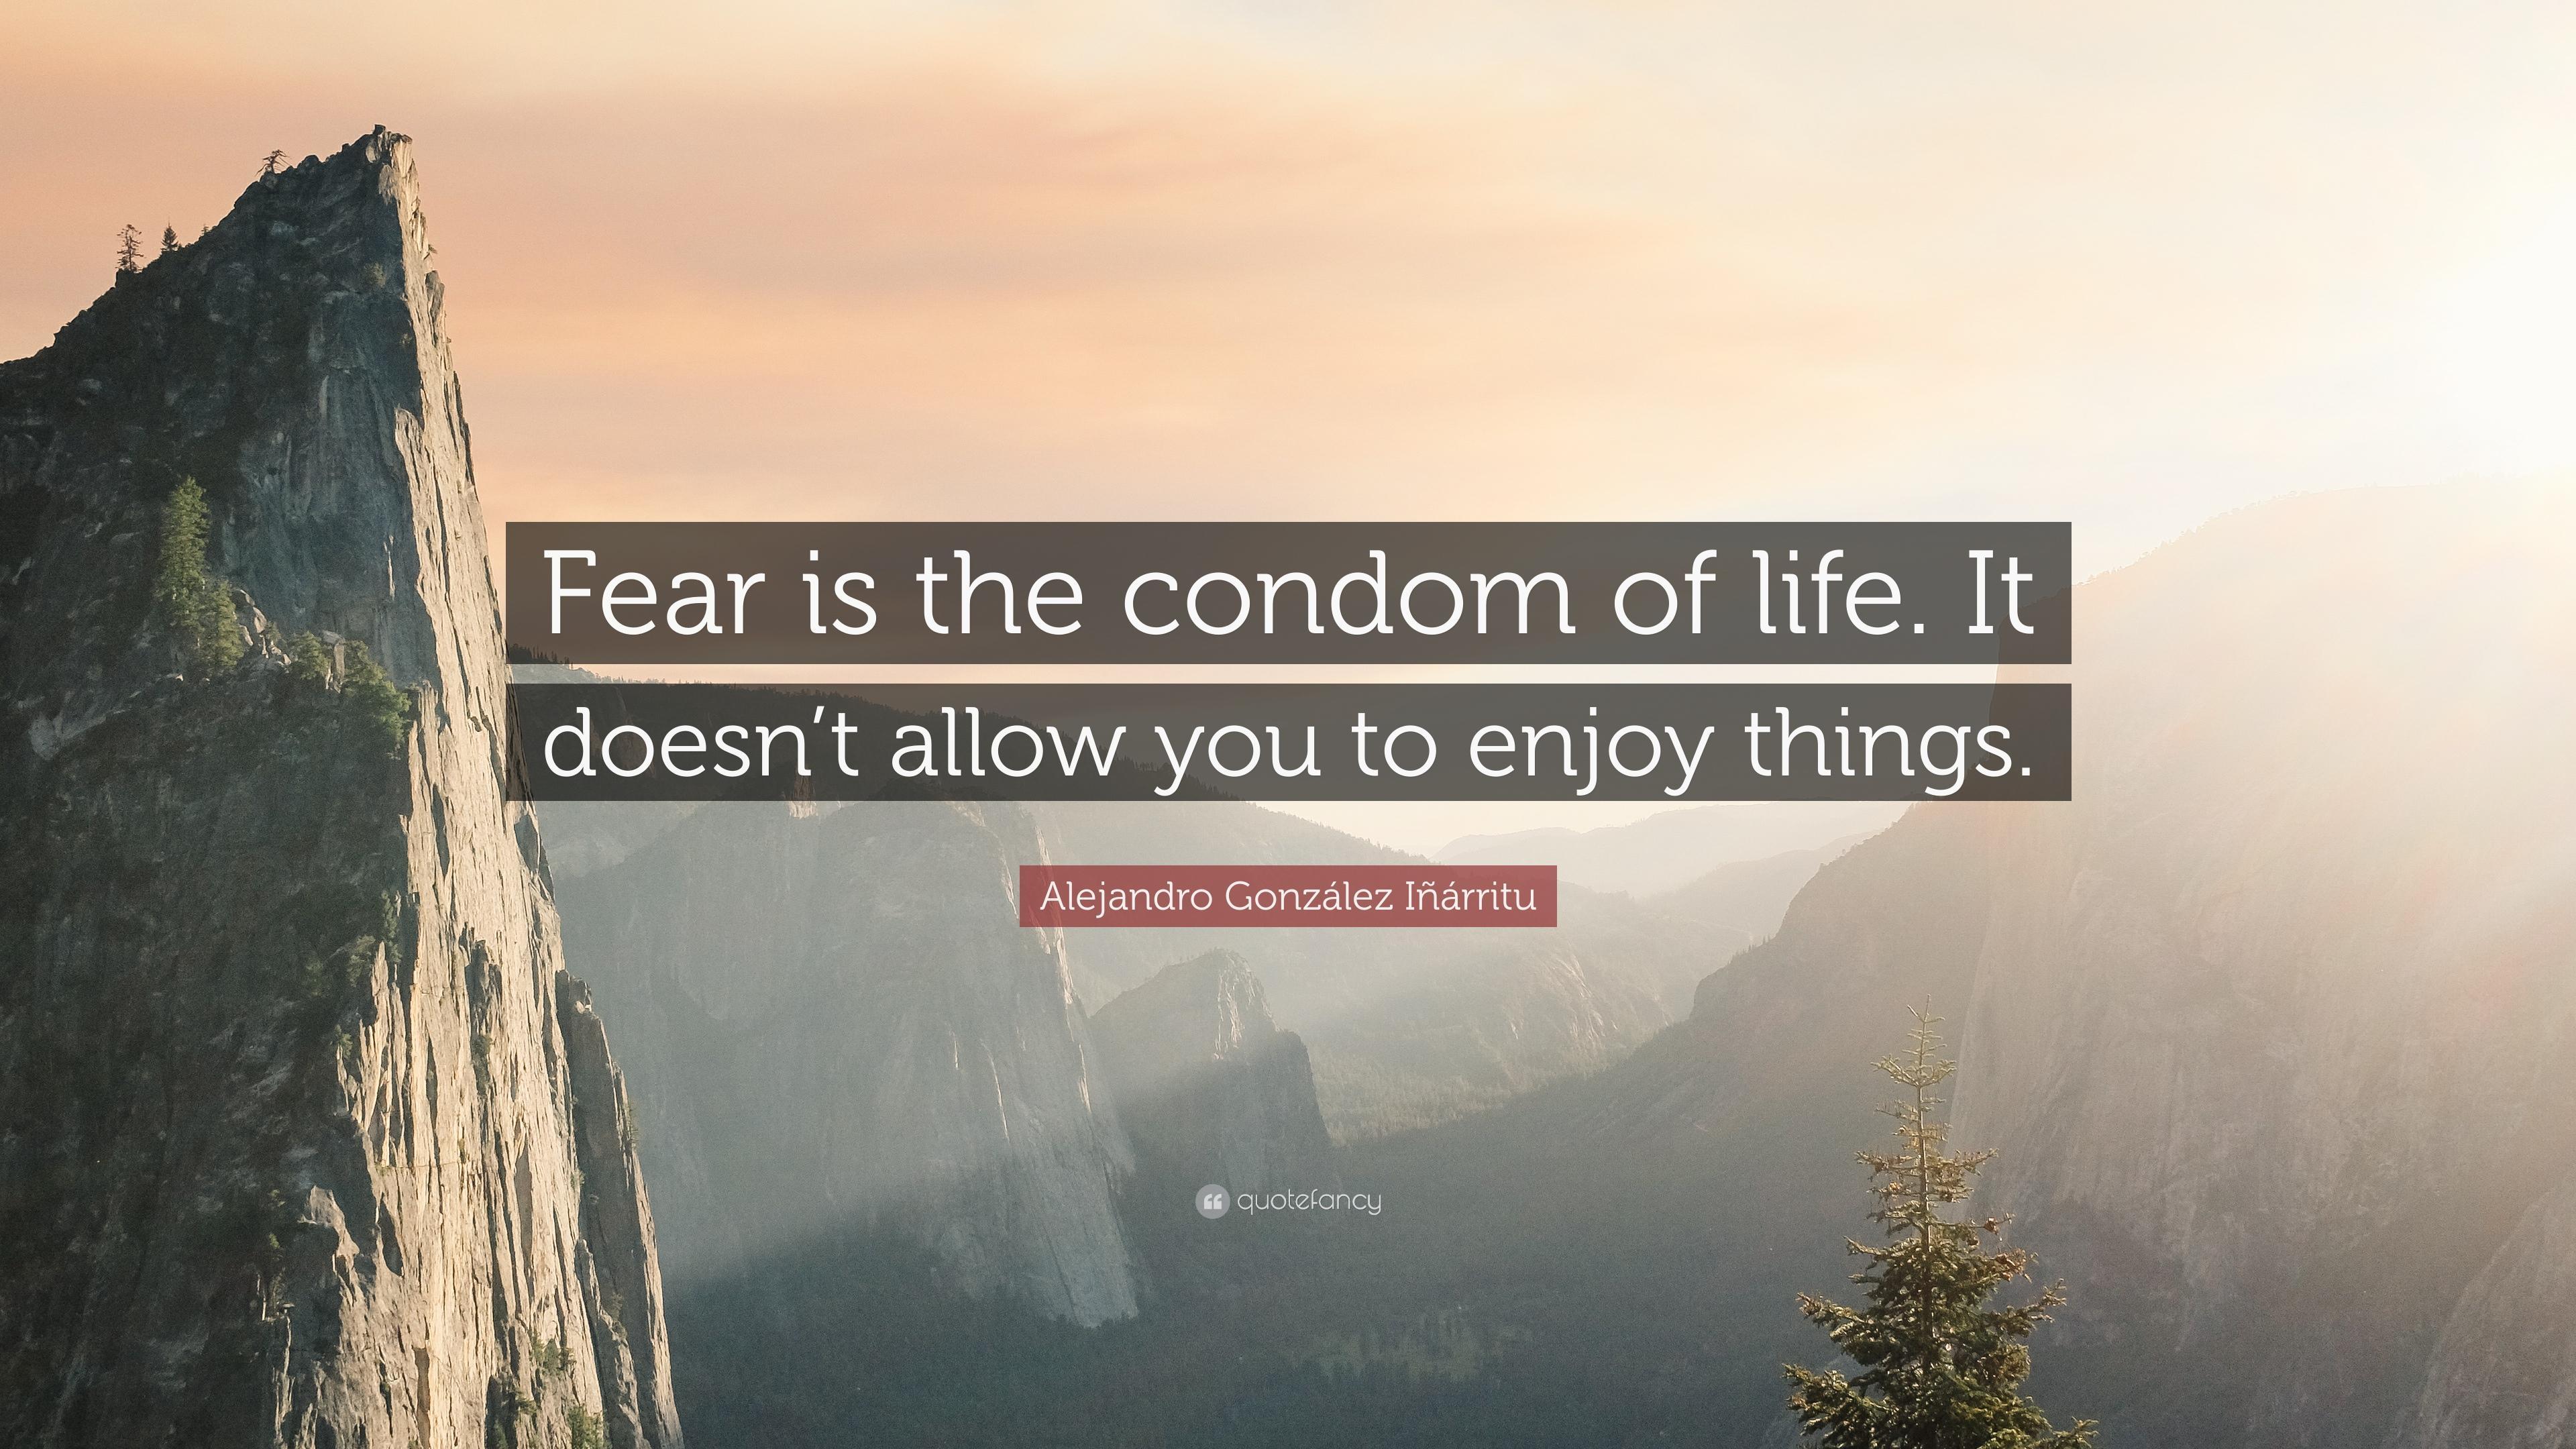 Alejandro González Iñárritu Quote: “Fear is the condom of life. It